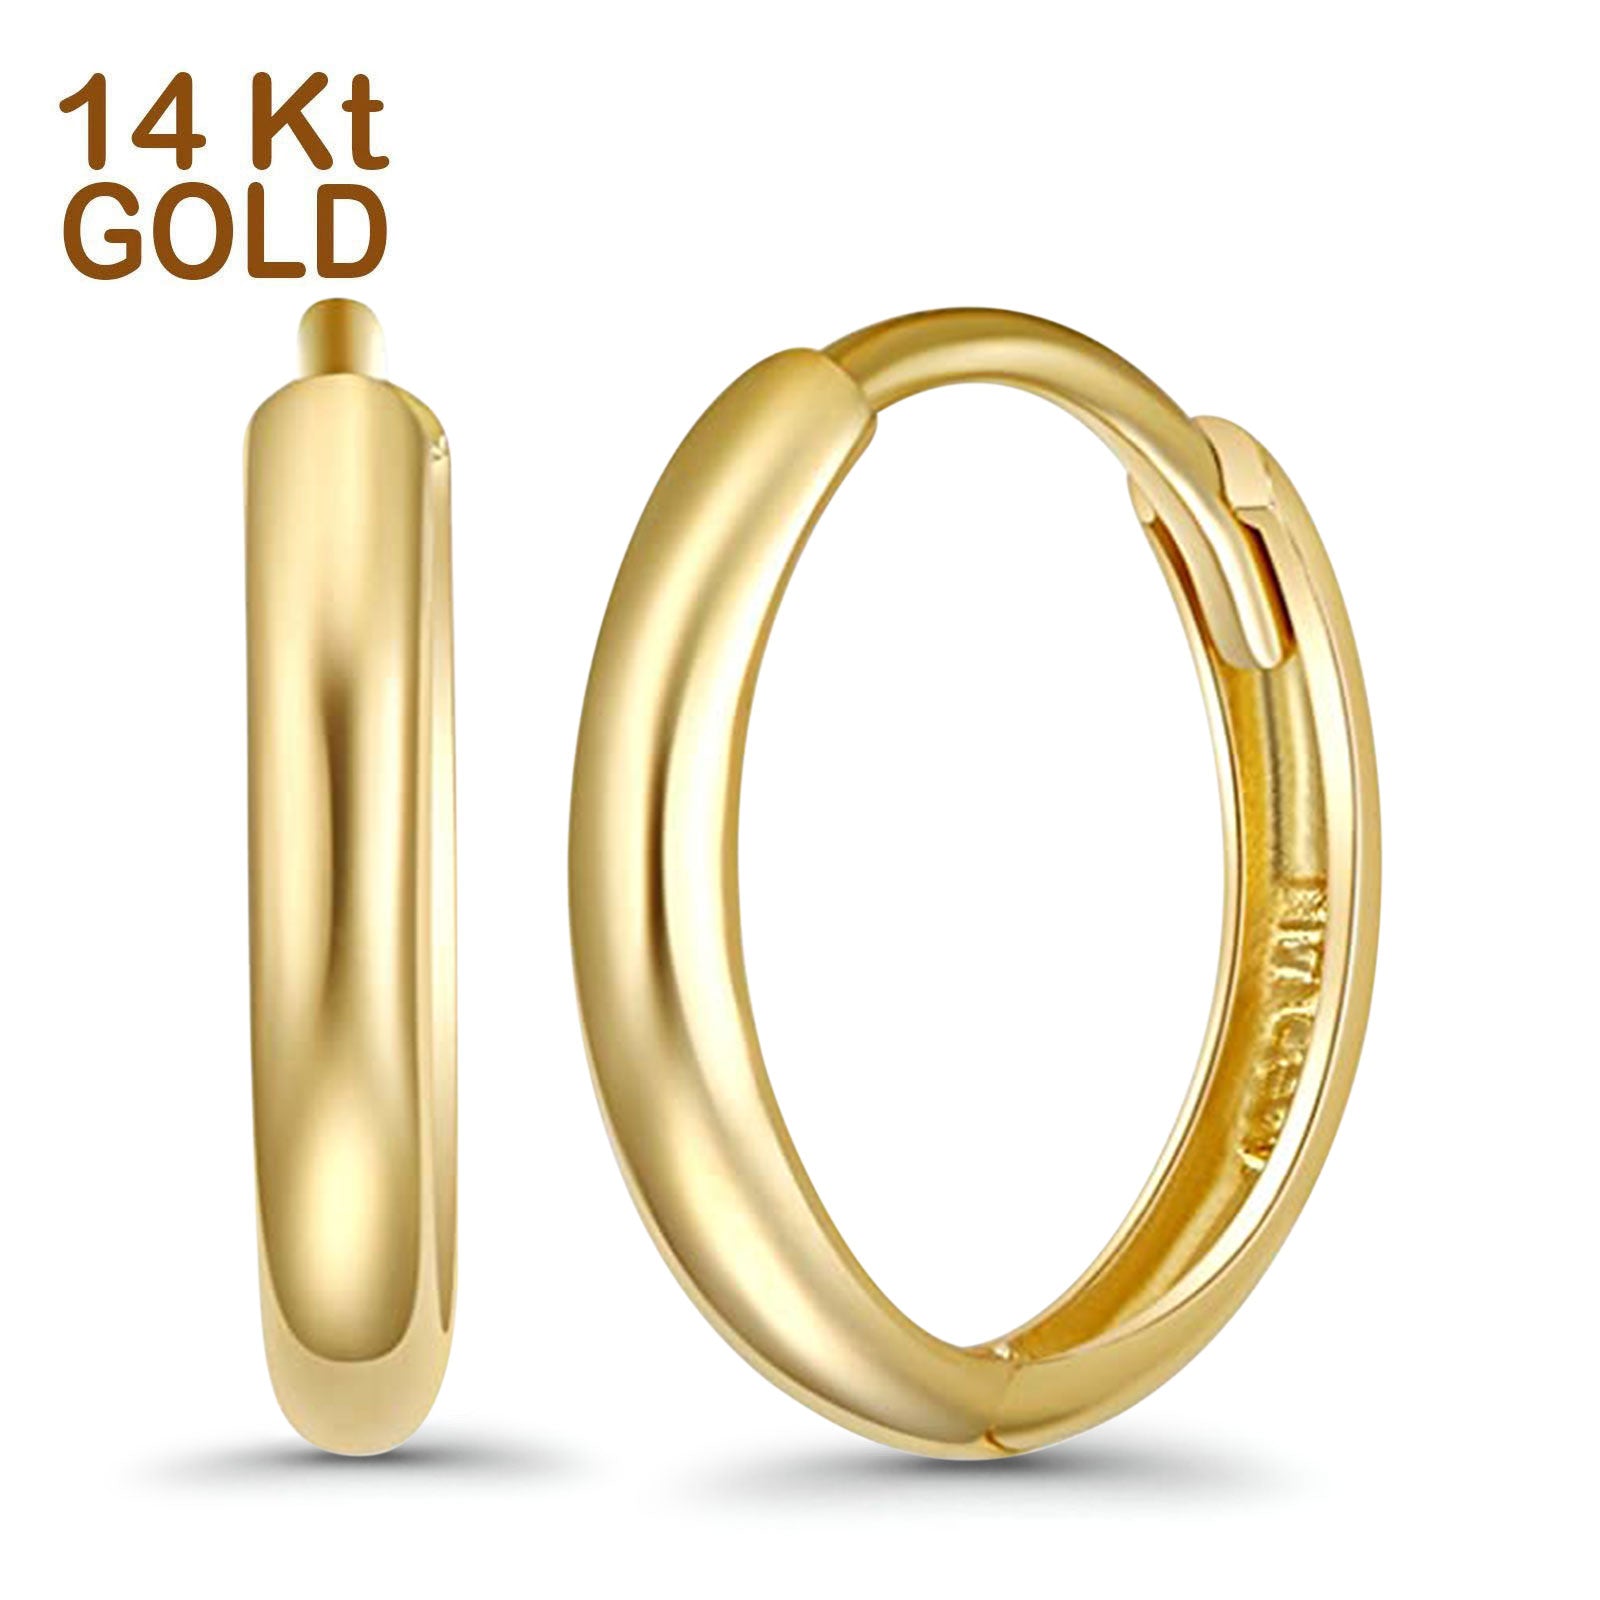 Buy BENZ Golden Round Hoop Earring for Girls & Boys at Amazon.in